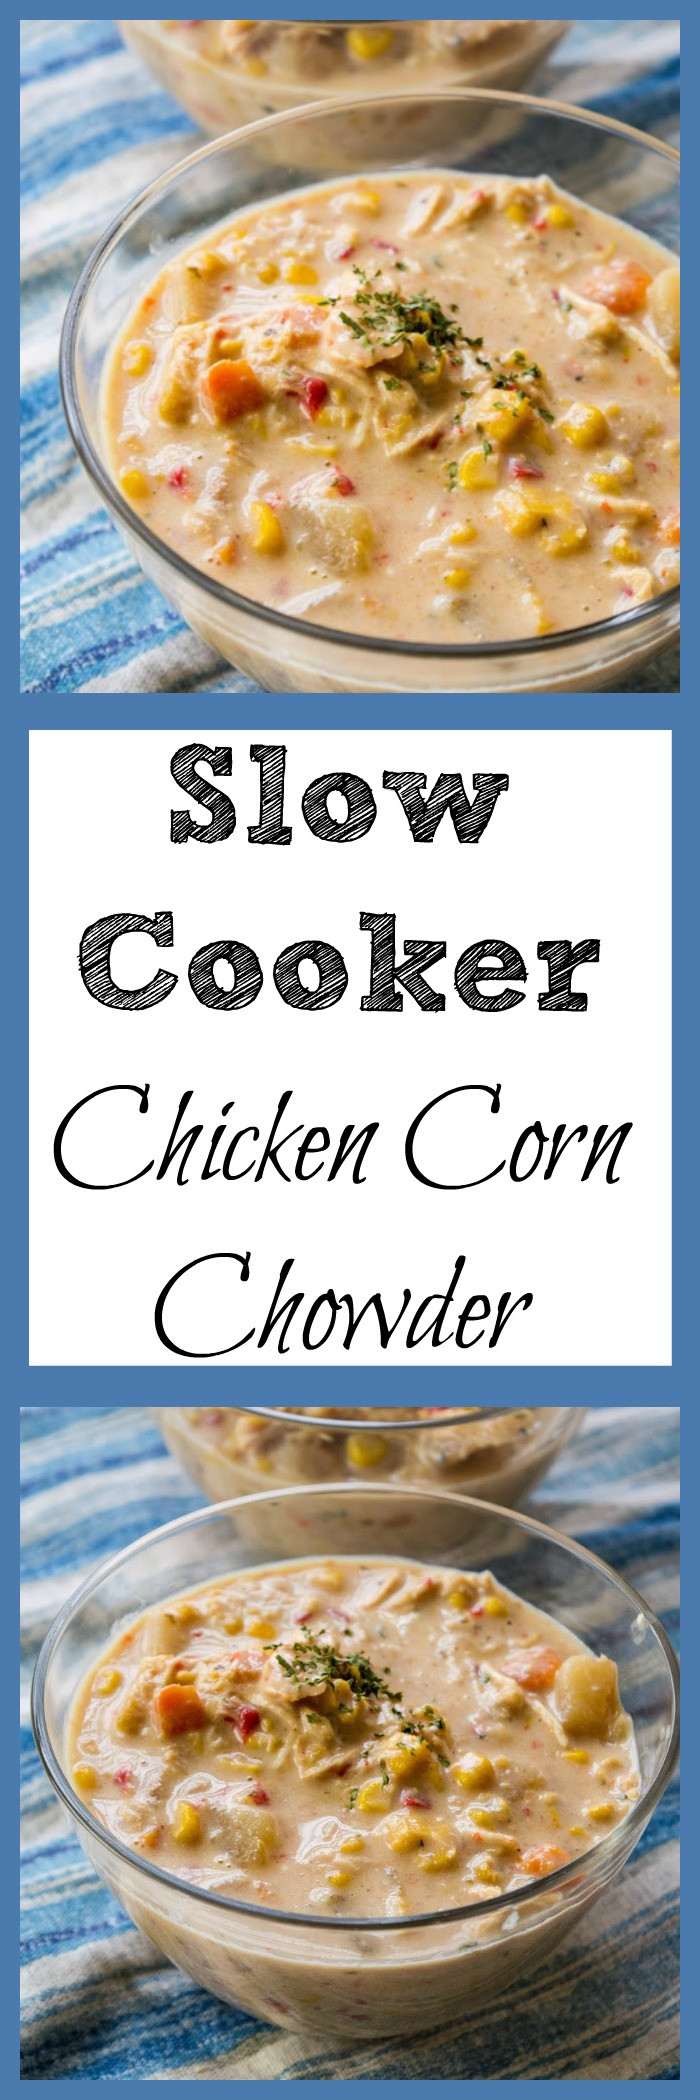 Slow Cooker Chicken Corn Chowder
 Slow Cooker Chicken Corn Chowder The Spring Mount 6 Pack